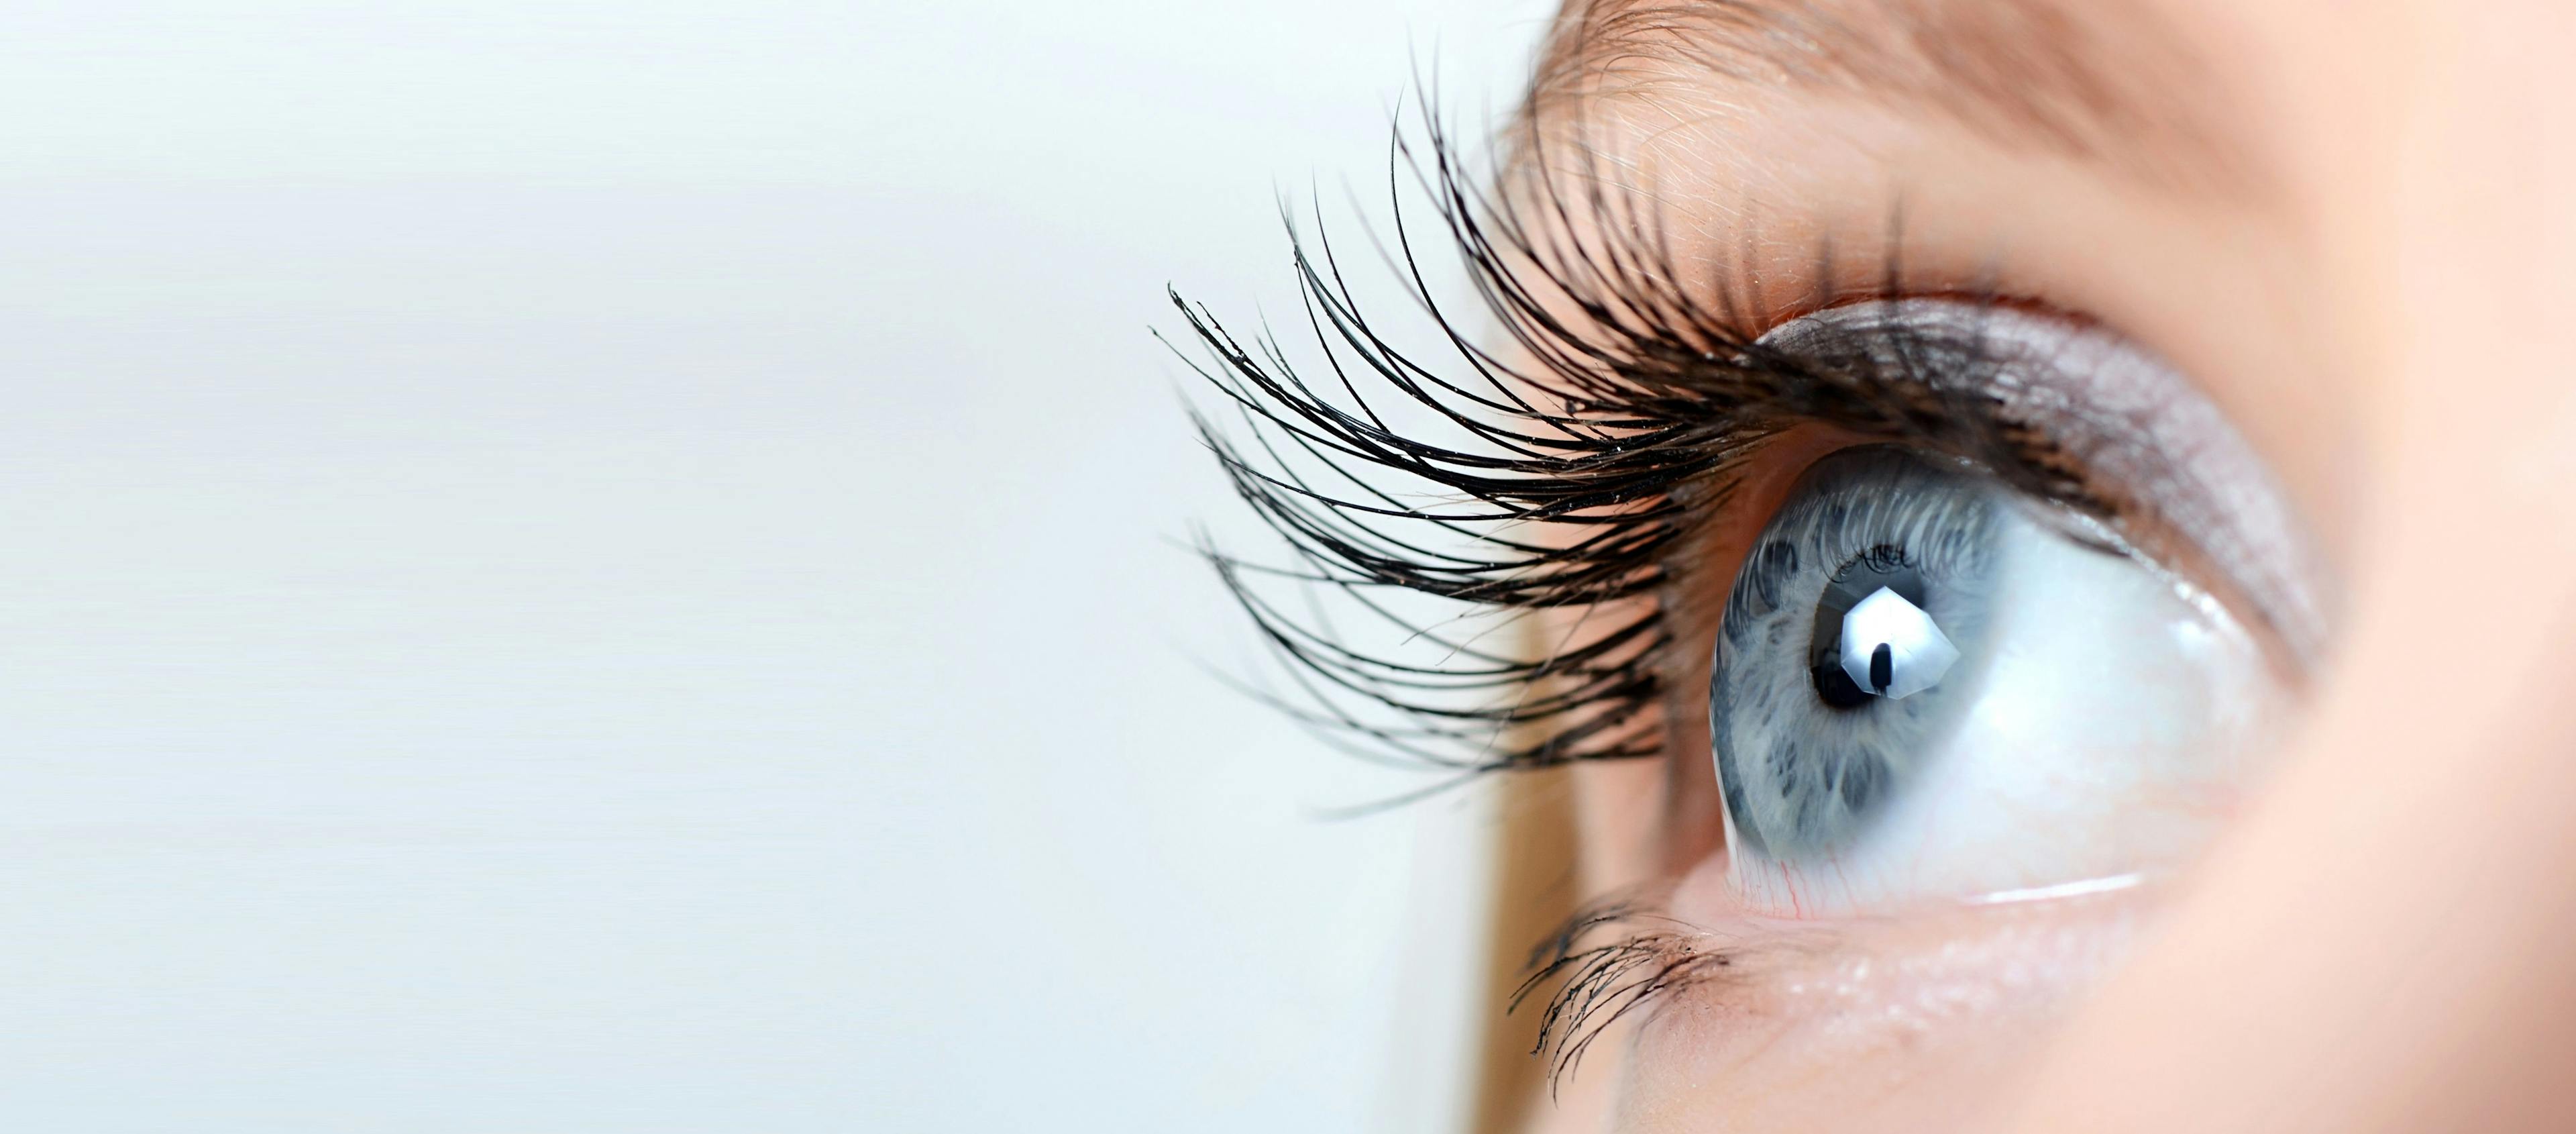 Close-up of eye | Image credit: Vladimir Voronin - stock.adobe.com